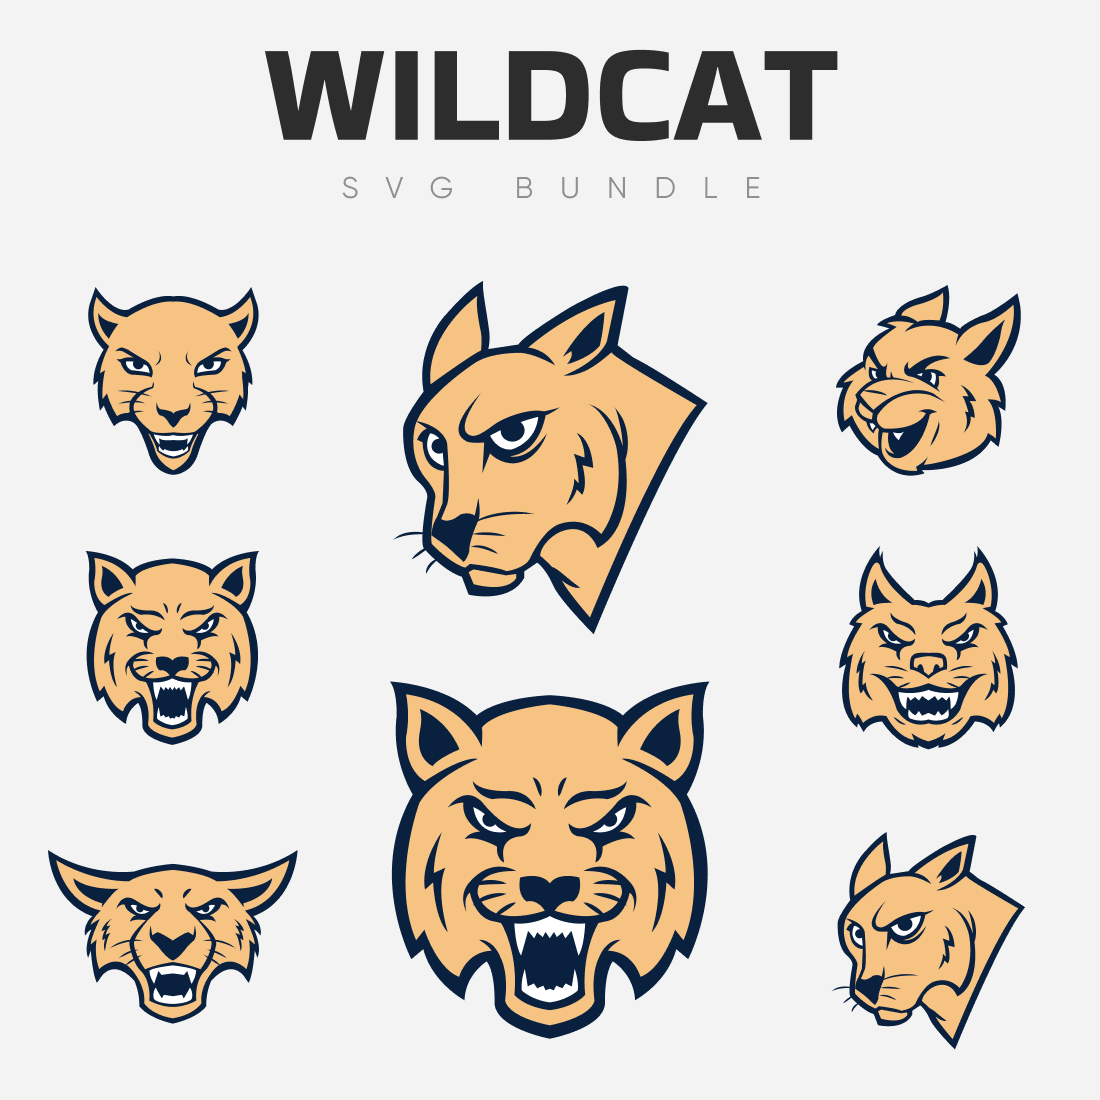 Many Heads of Wildcat SVG Bundle.